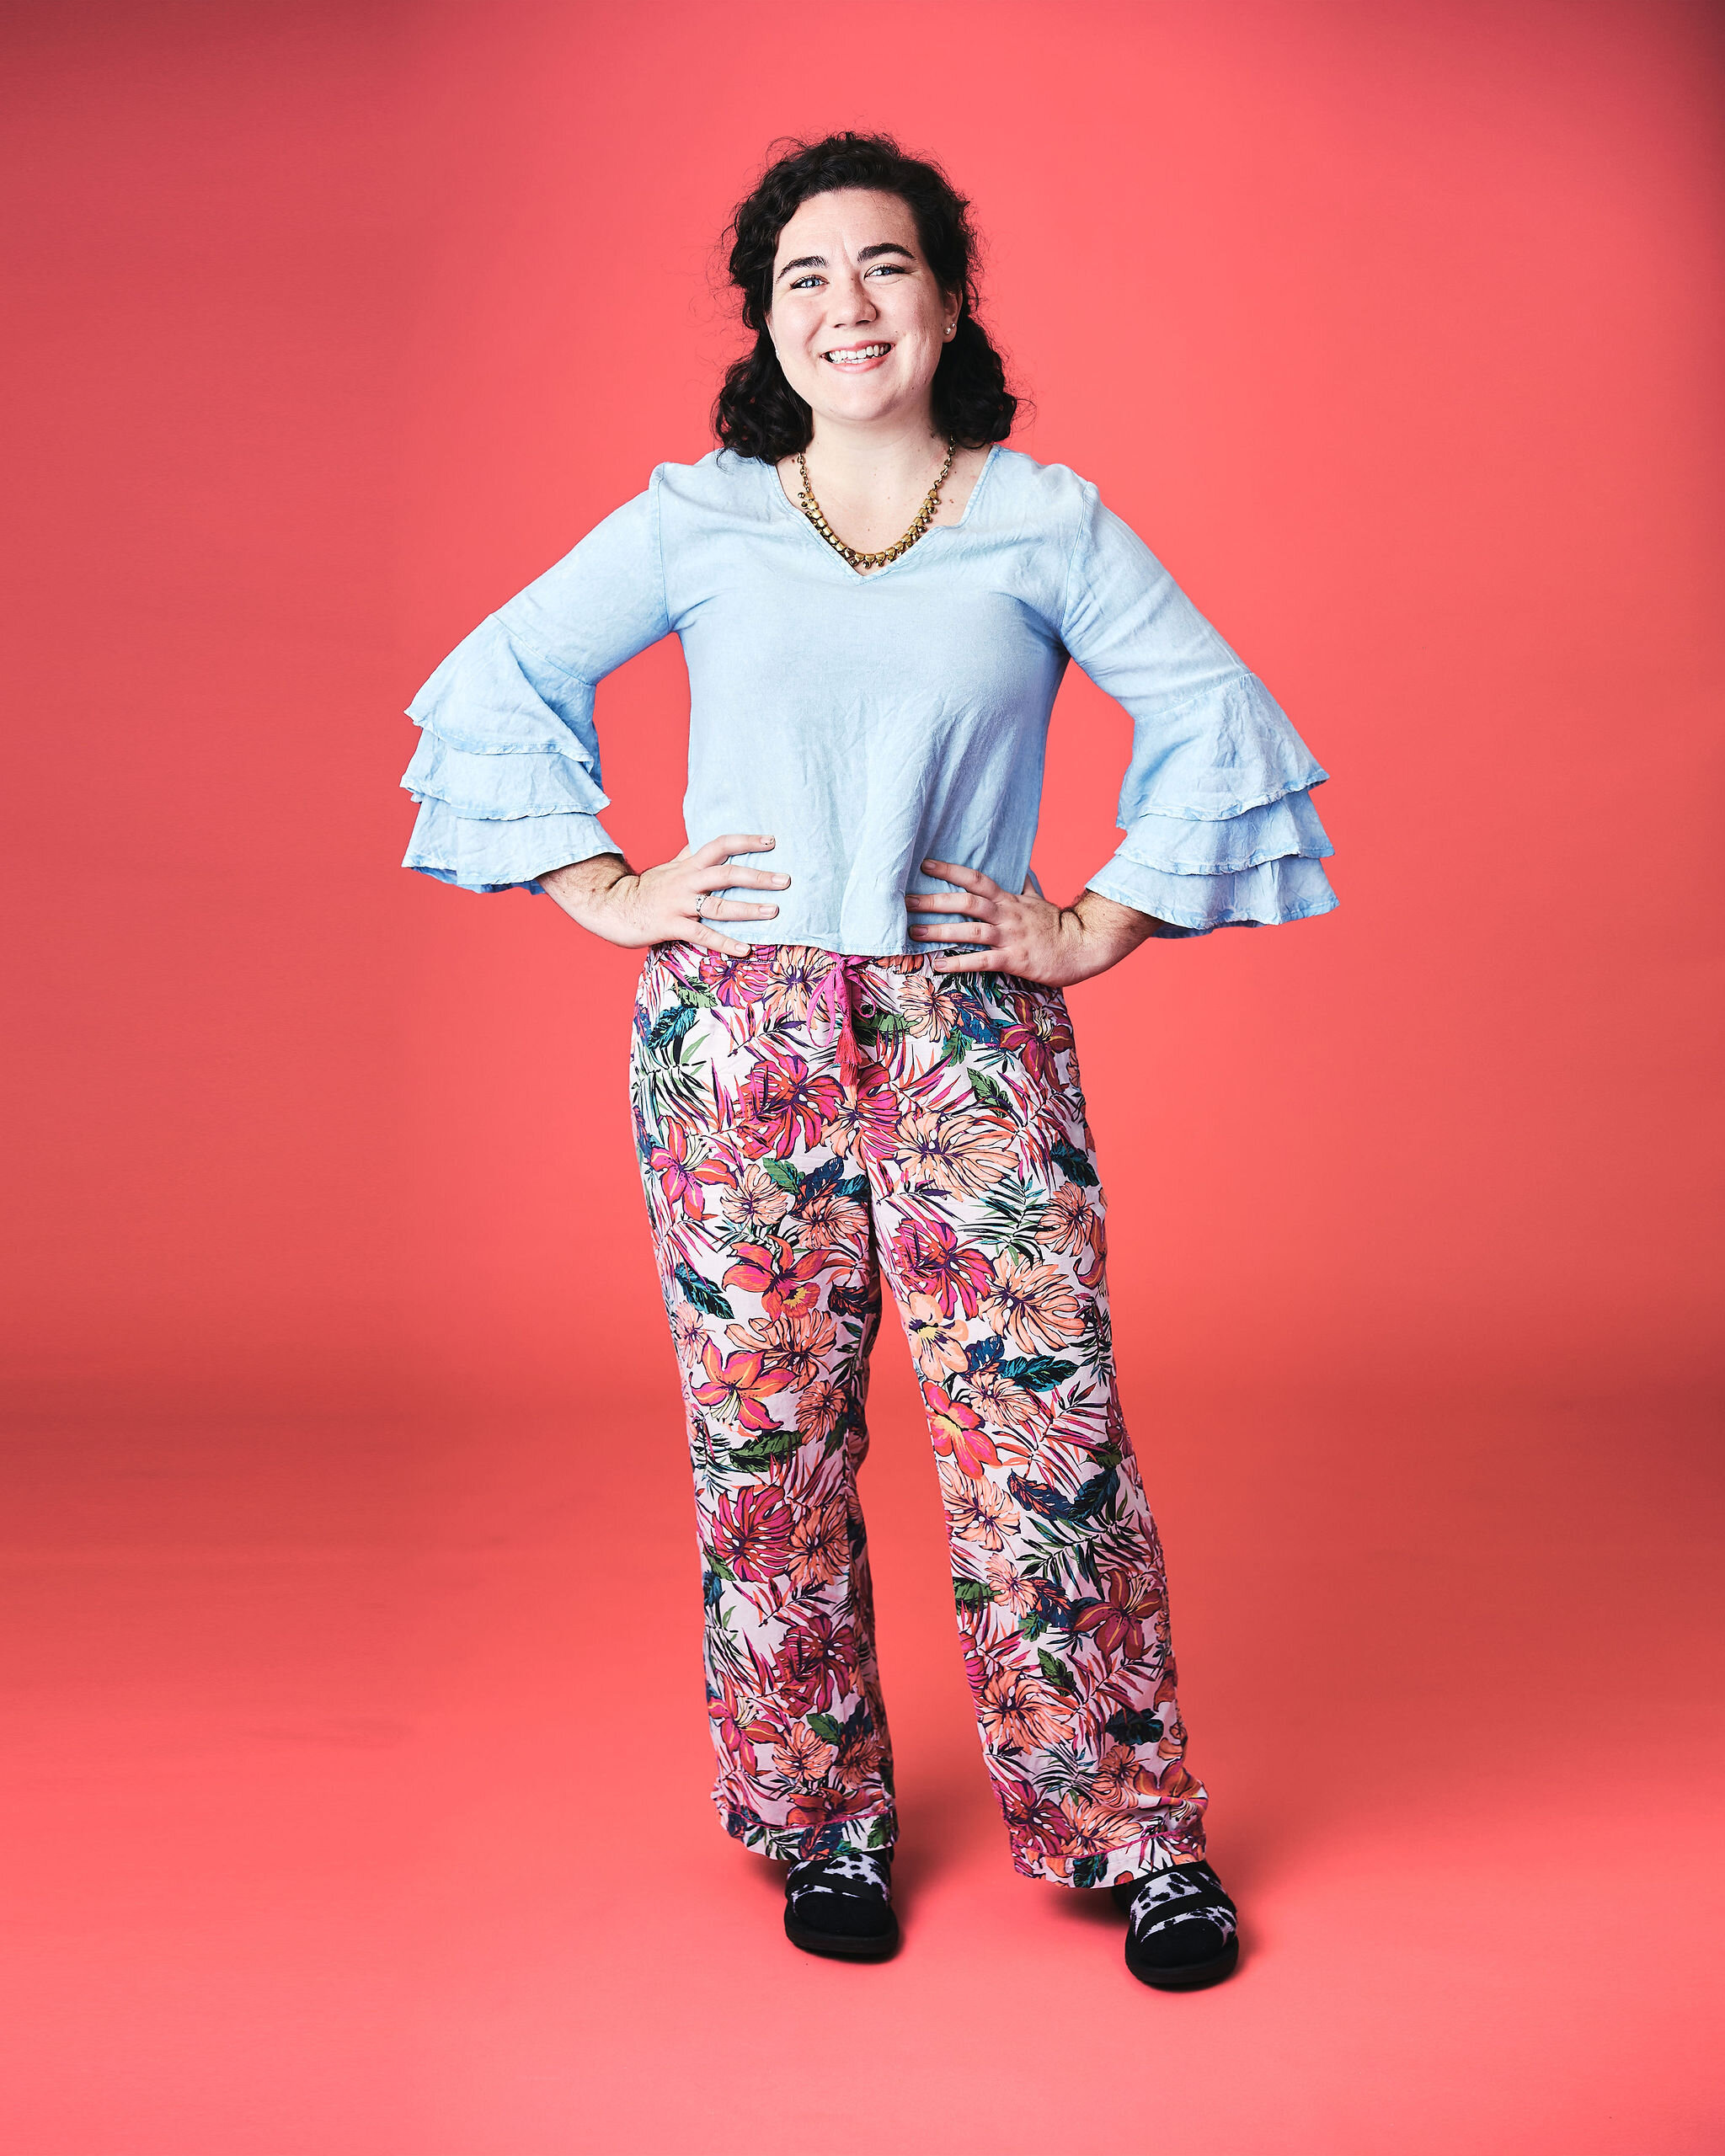 Meet Delaney Stoner // COVIDwear